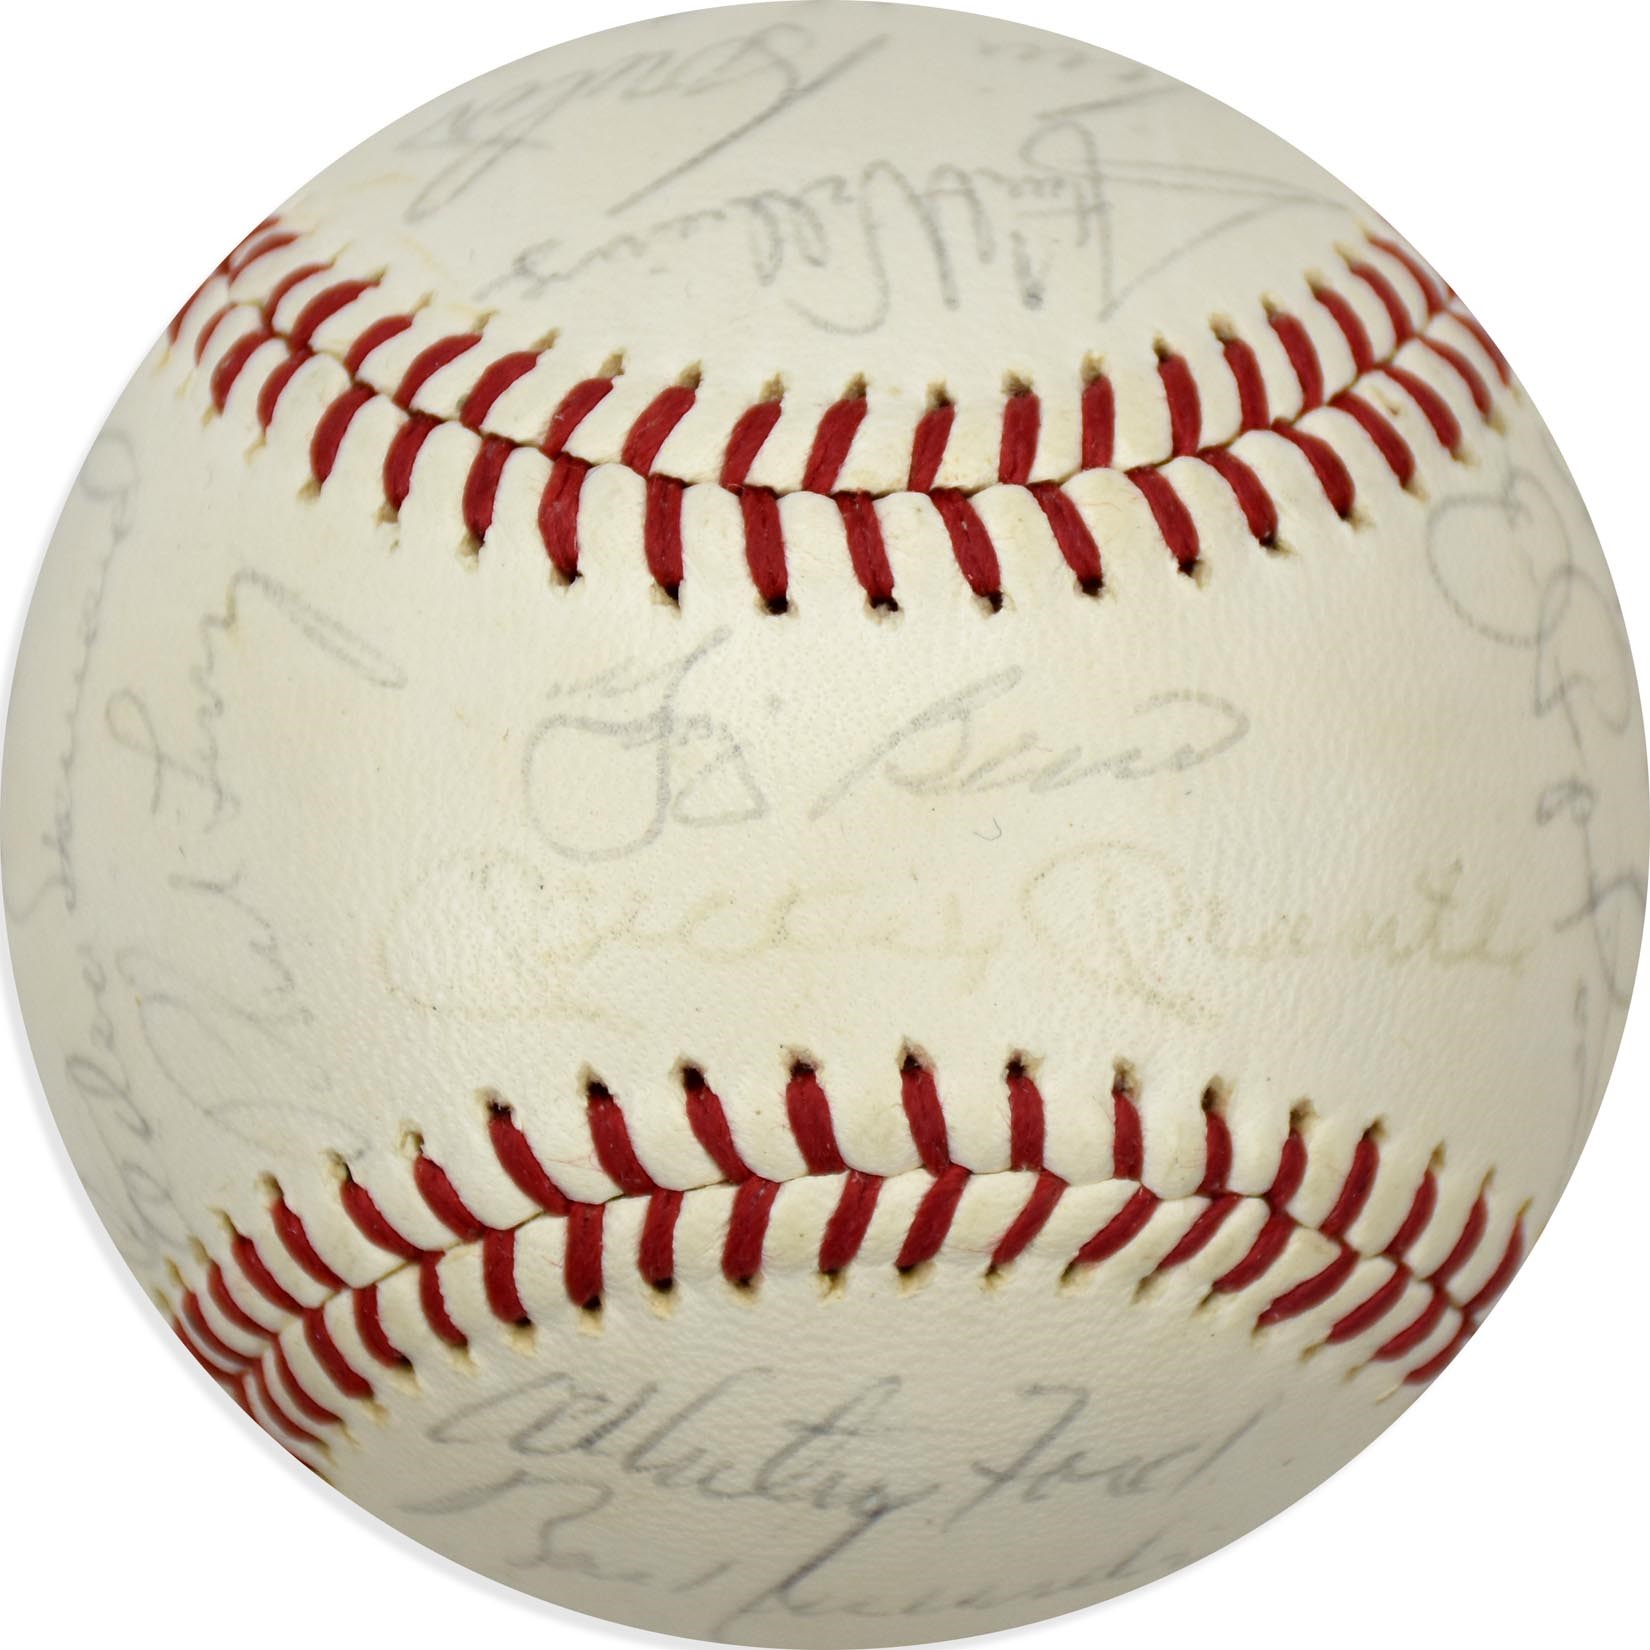 NY Yankees, Giants & Mets - 1964 New York Yankees American League Champions Team-Signed Baseball (PSA)